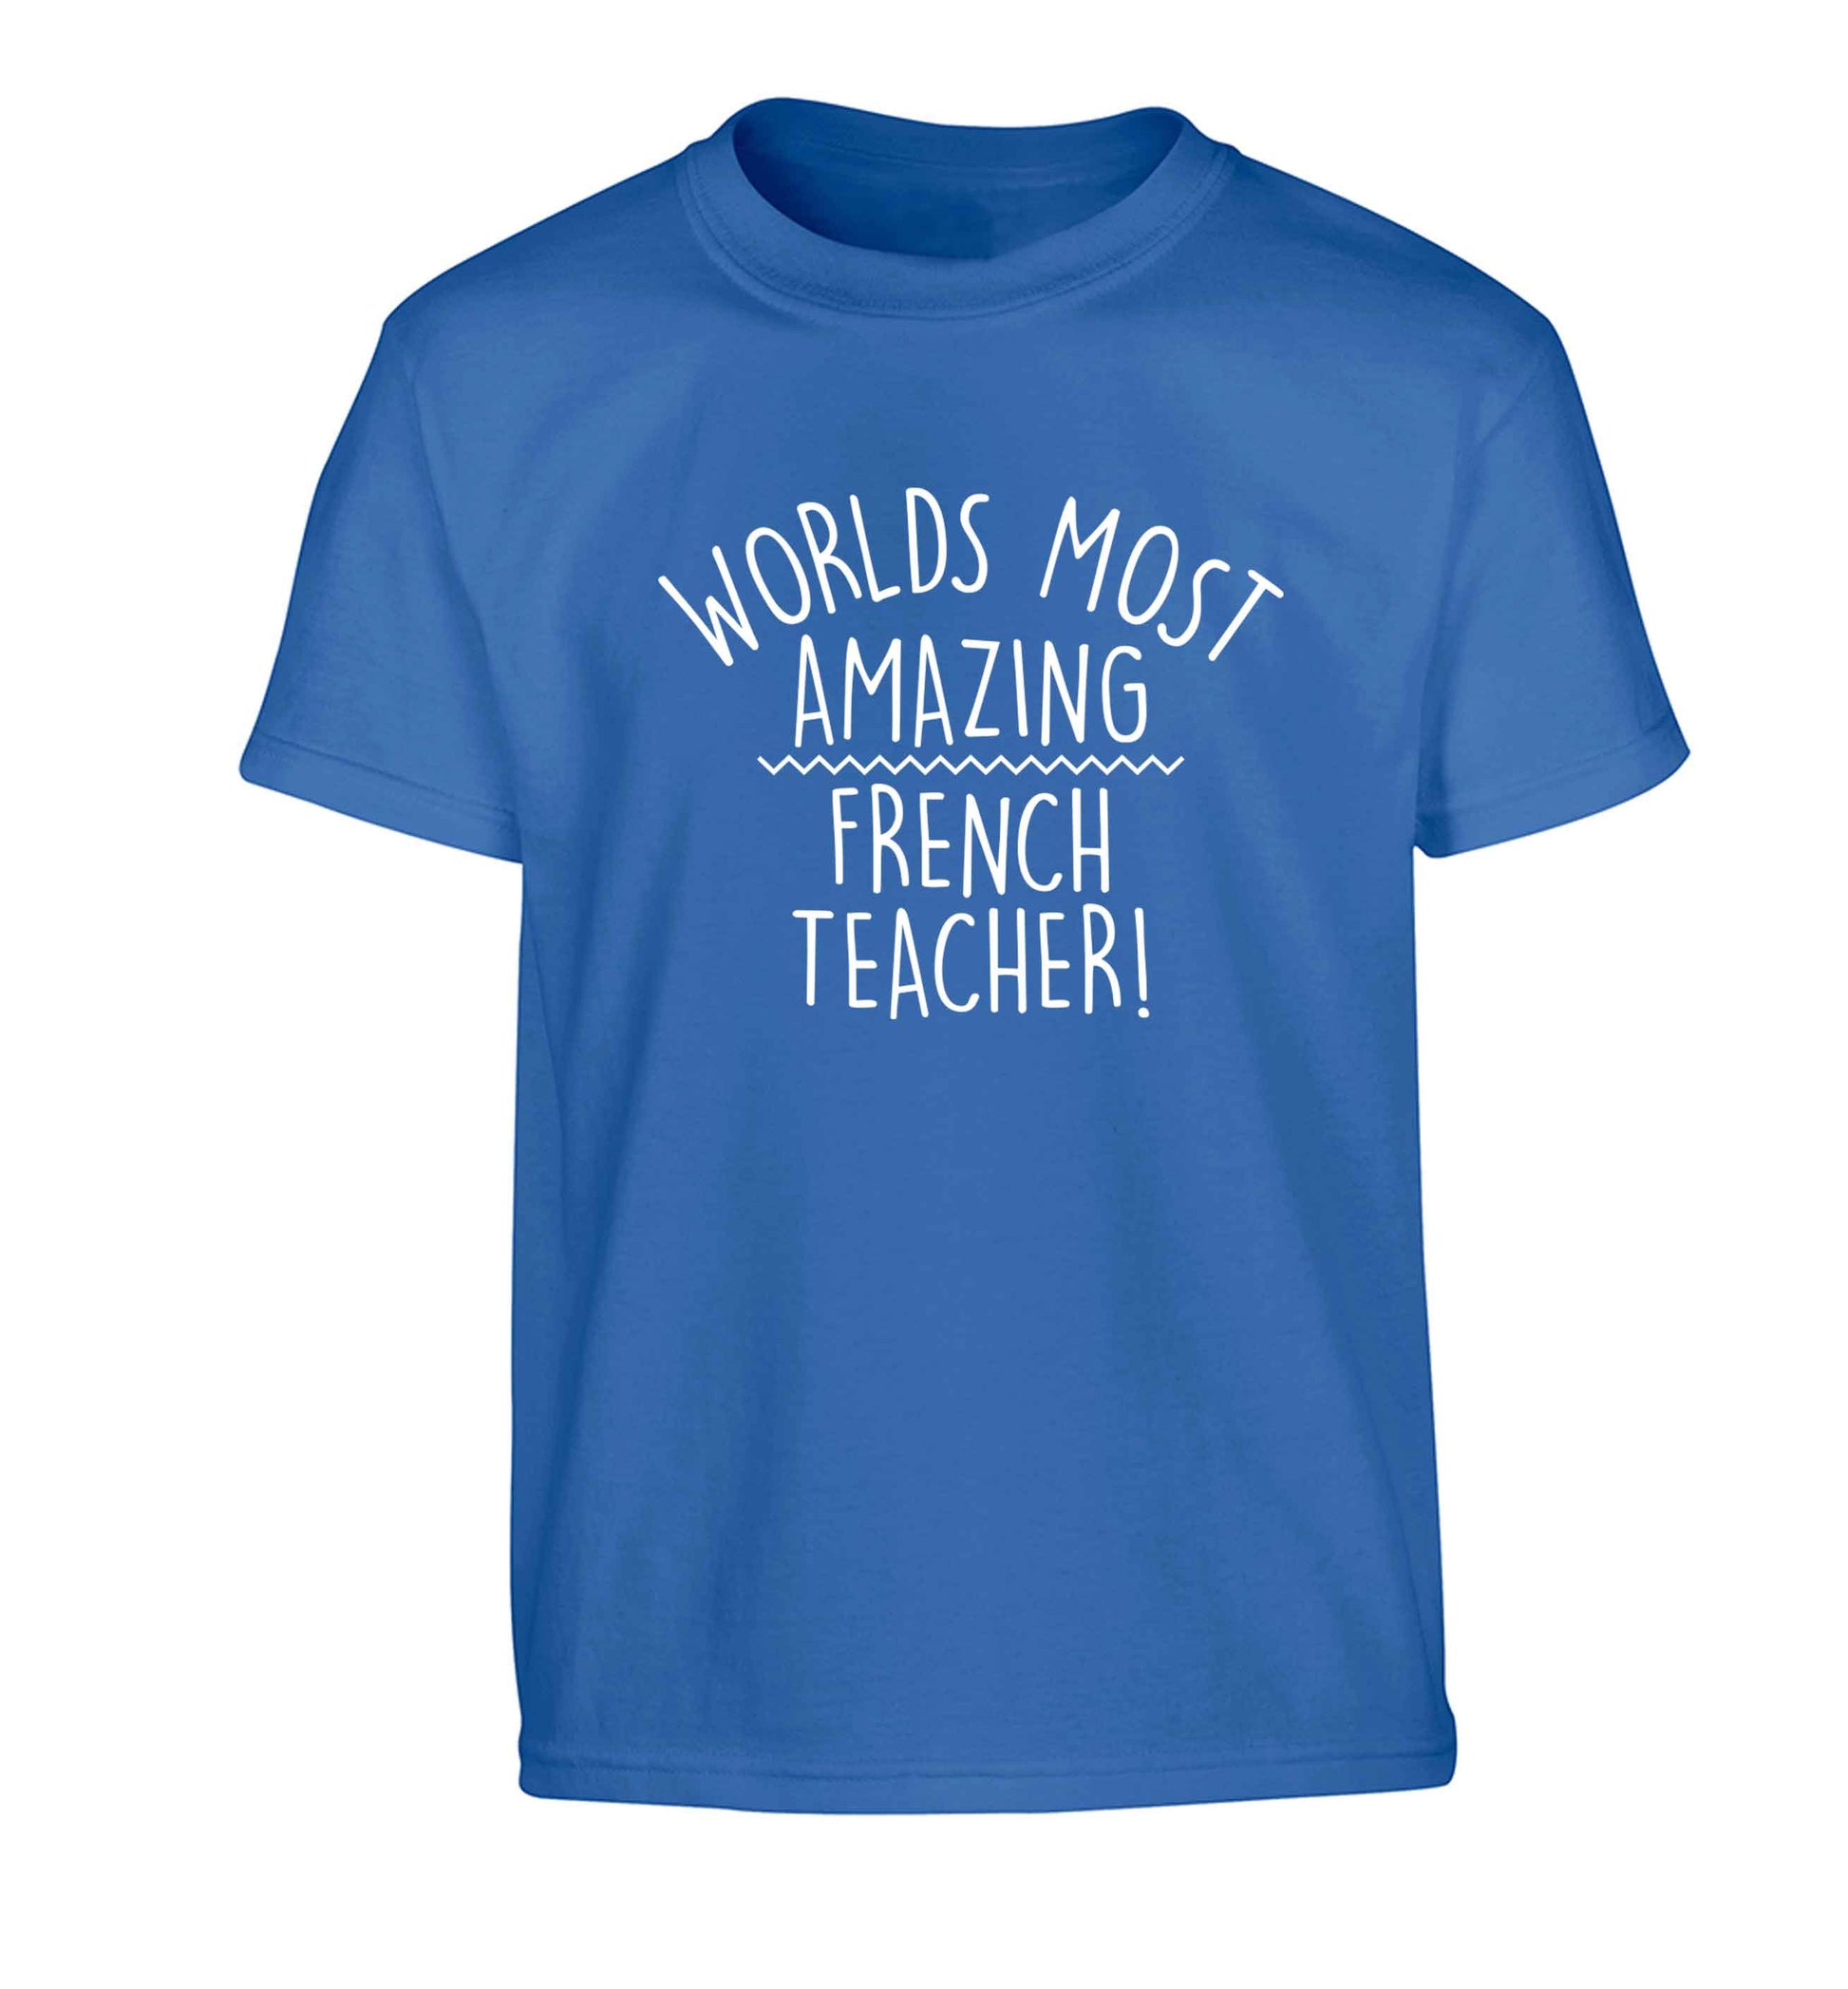 Worlds most amazing French teacher Children's blue Tshirt 12-13 Years